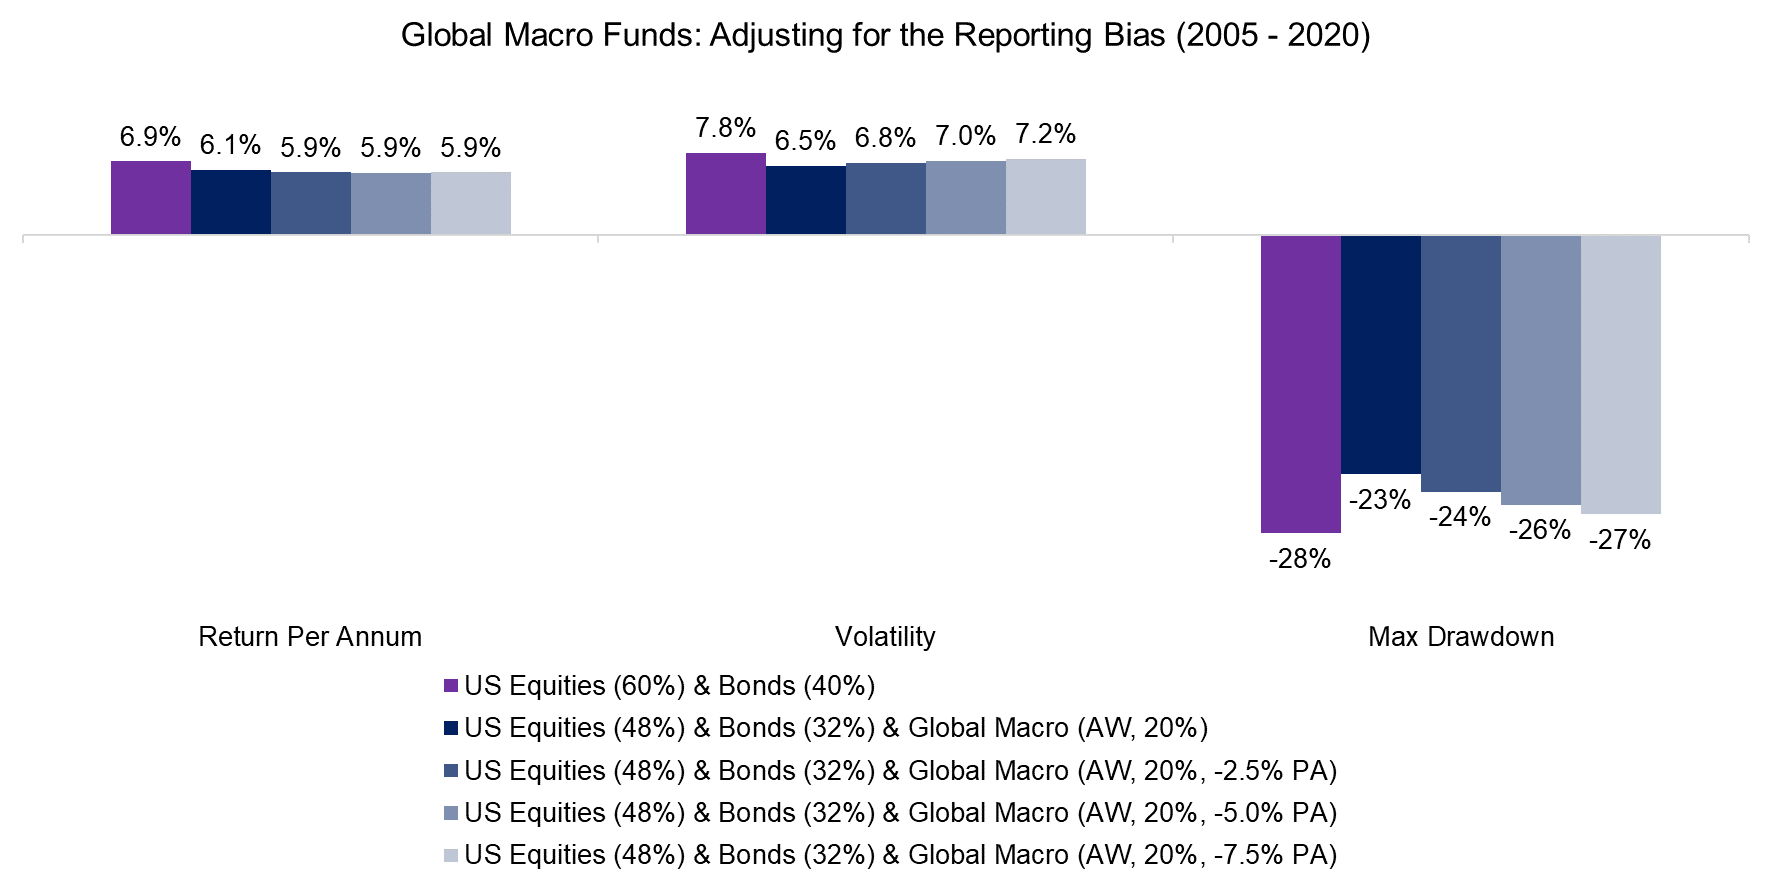 Global Macro Funds Adjusting for the Reporting Bias (2005 - 2020)